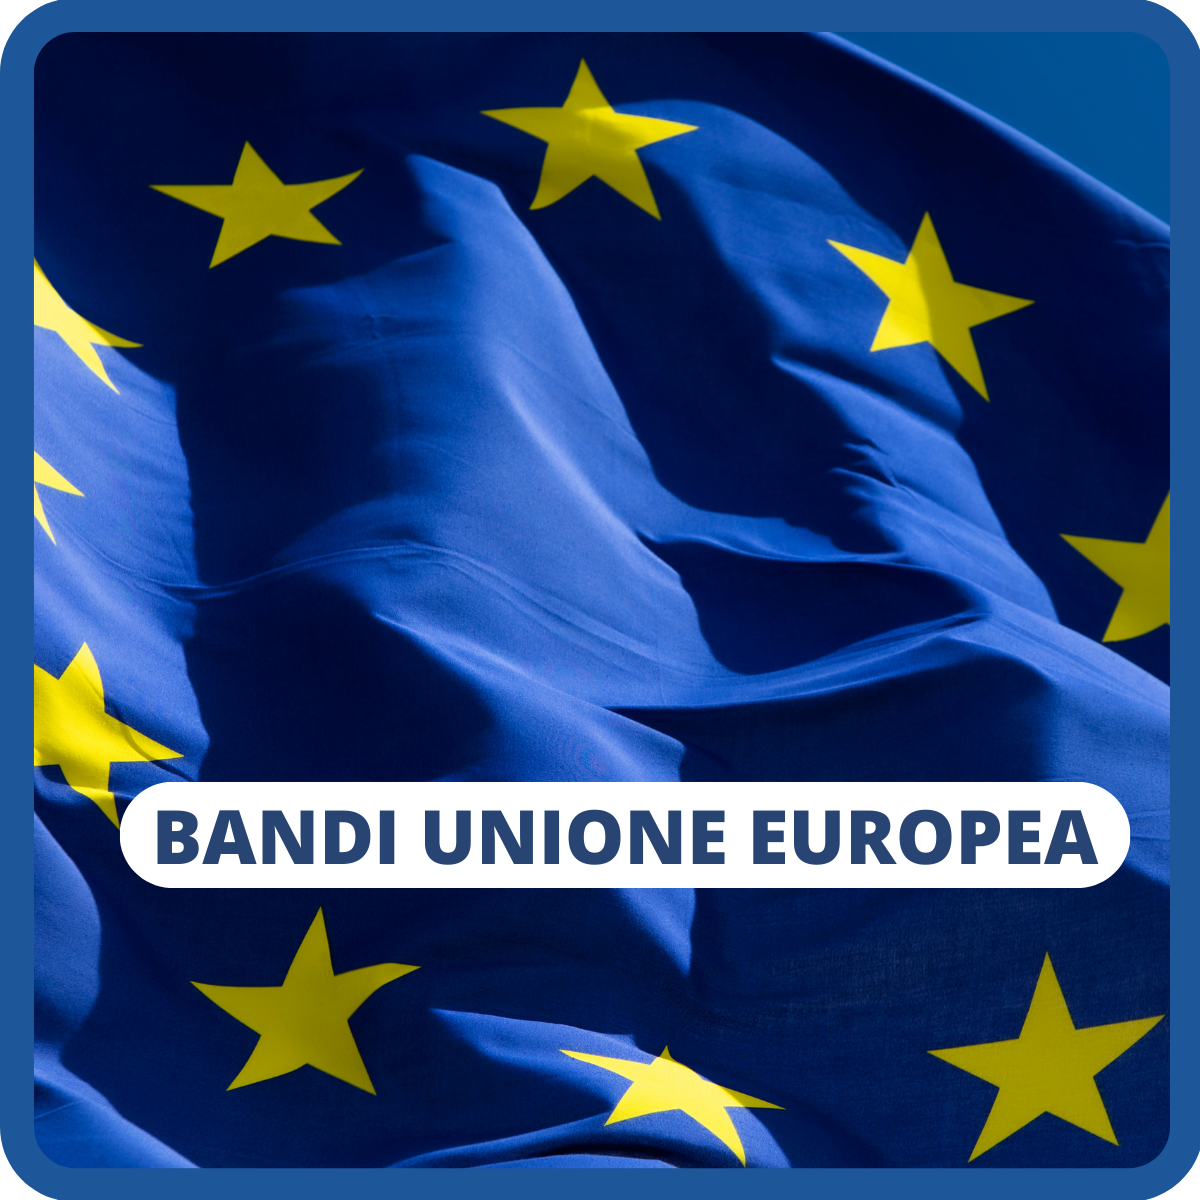 Bandi europei unione europea Ue confartigianato piccole medie imprese